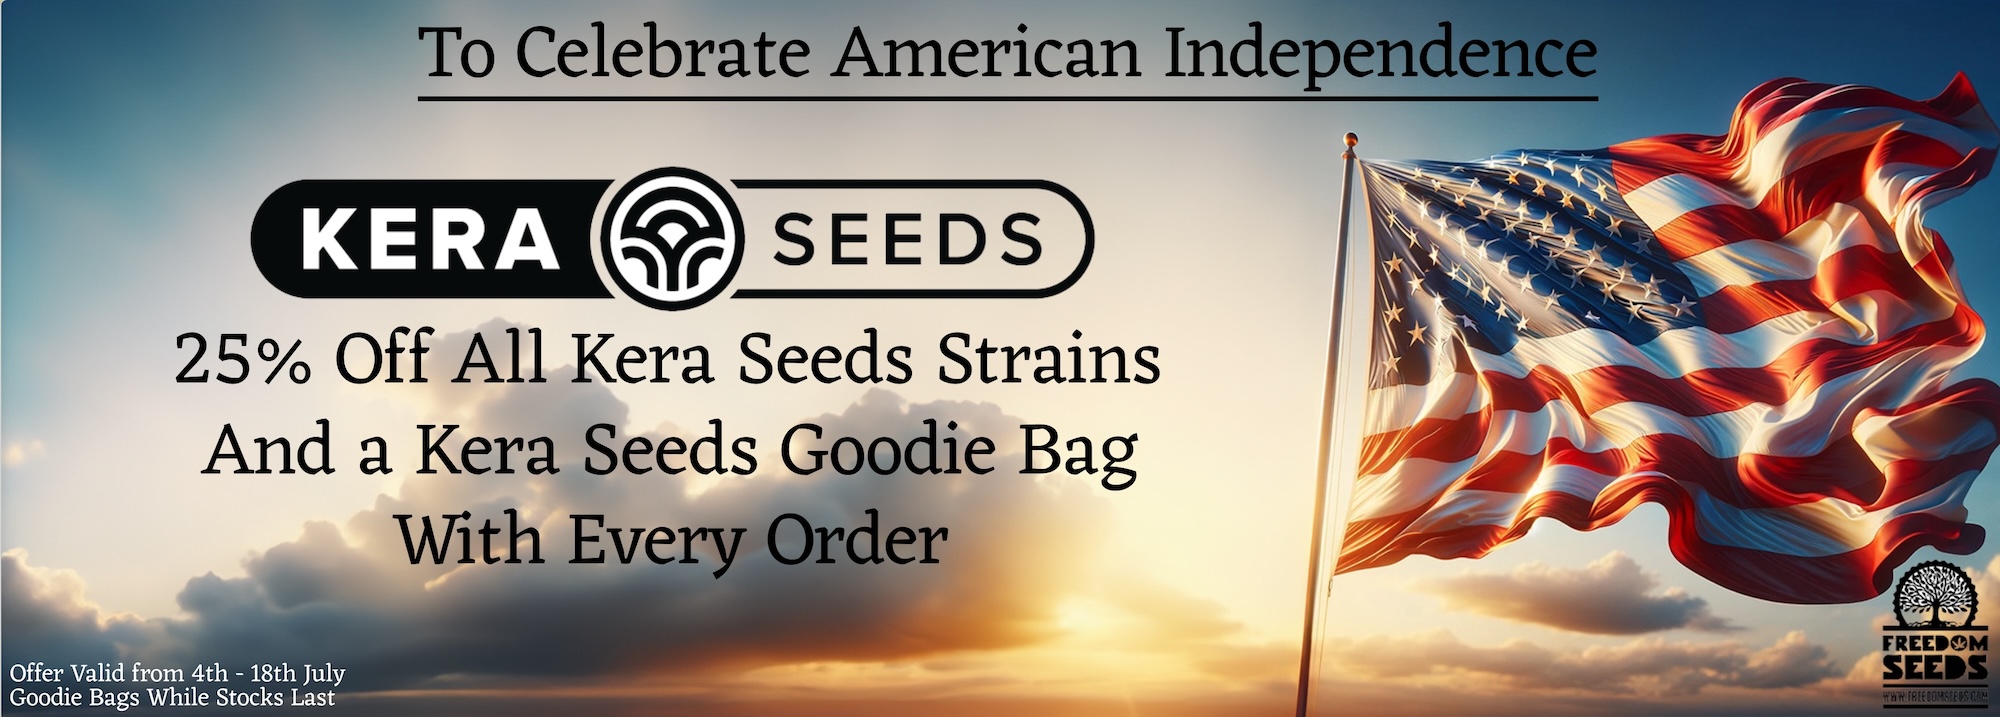 Kera Seeds America banner